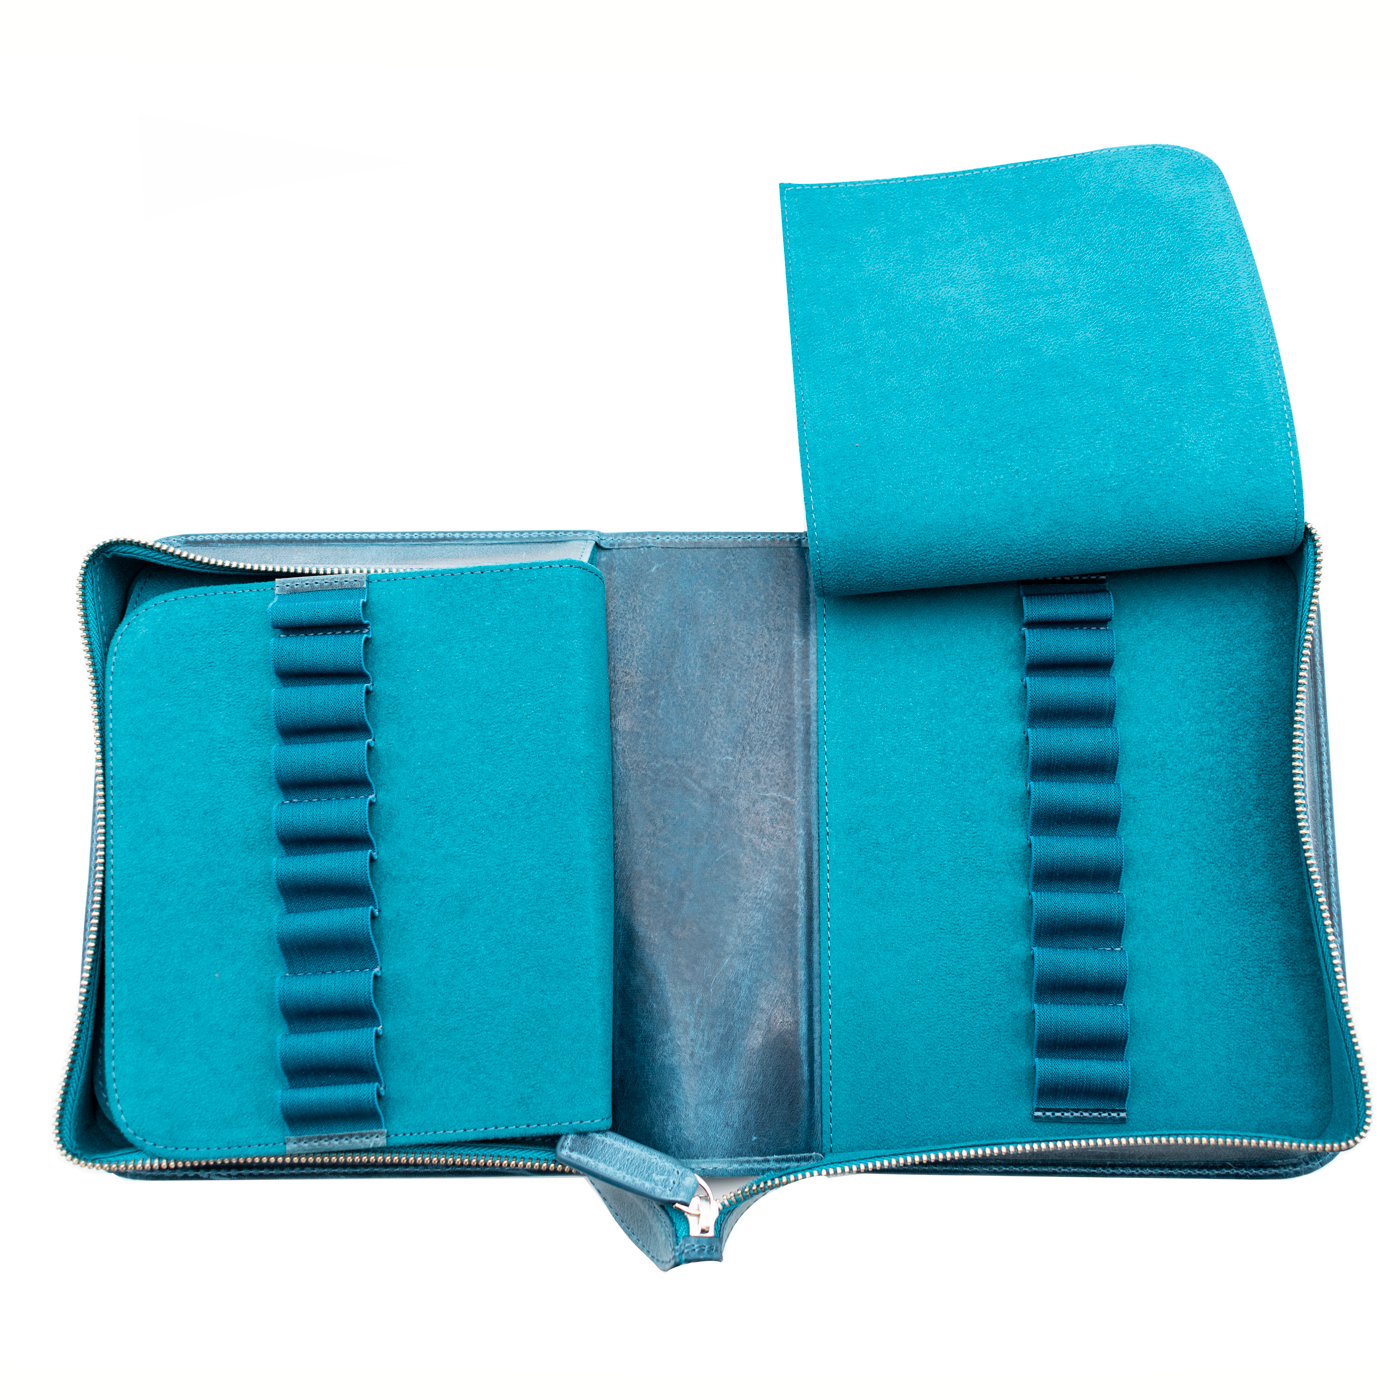 Galen Leather Zippered 40 Slots Pen Case - Crazy Horse Ocean Blue